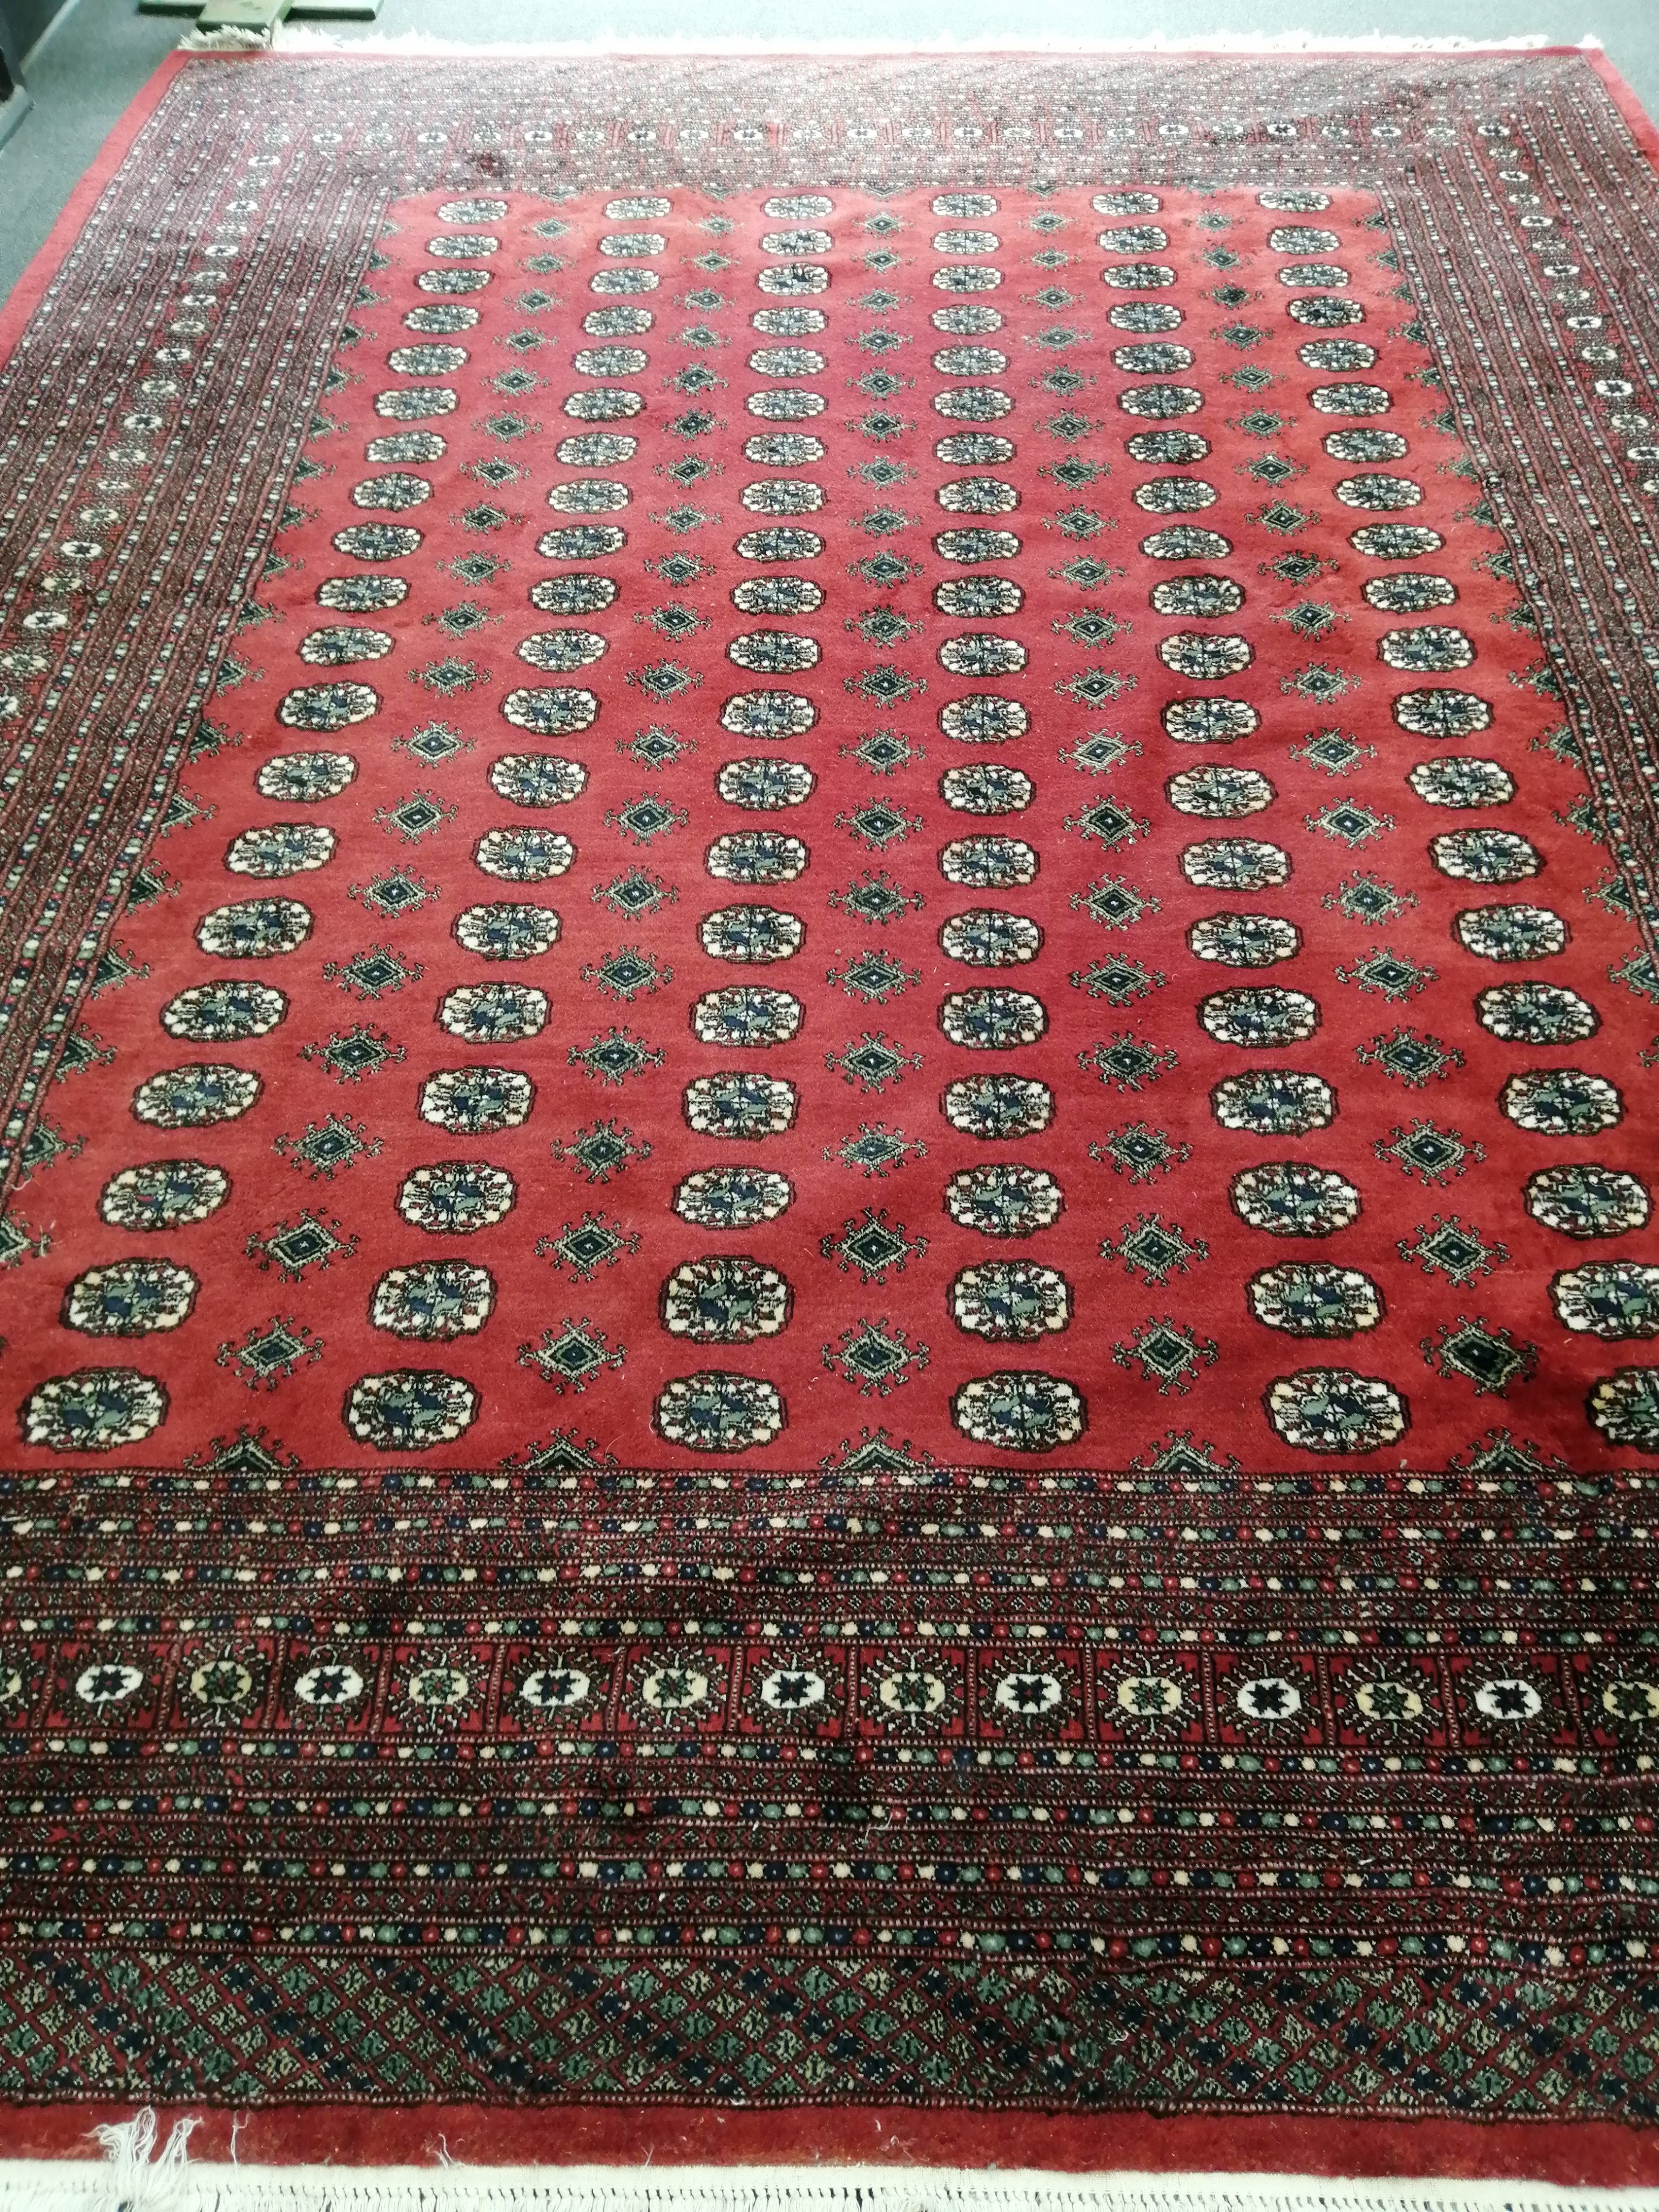 A Bokhara red ground carpet 360 x 284 cms